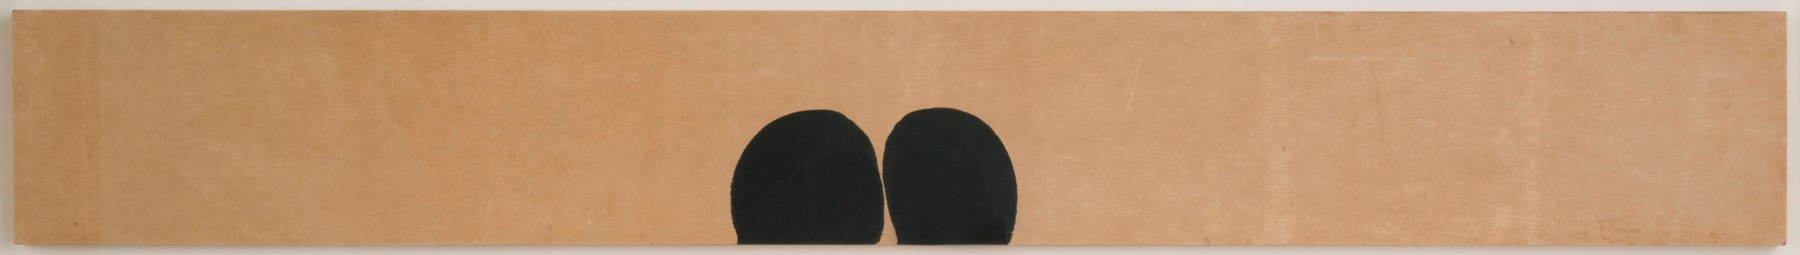 James Lee Byars

&amp;ldquo;Untitled&amp;rdquo;, ca. 1960

Ink on Japanese paper

9 x 68 3/4 inches

23 x 177 cm

JBZ 292

$200,000

&amp;nbsp;